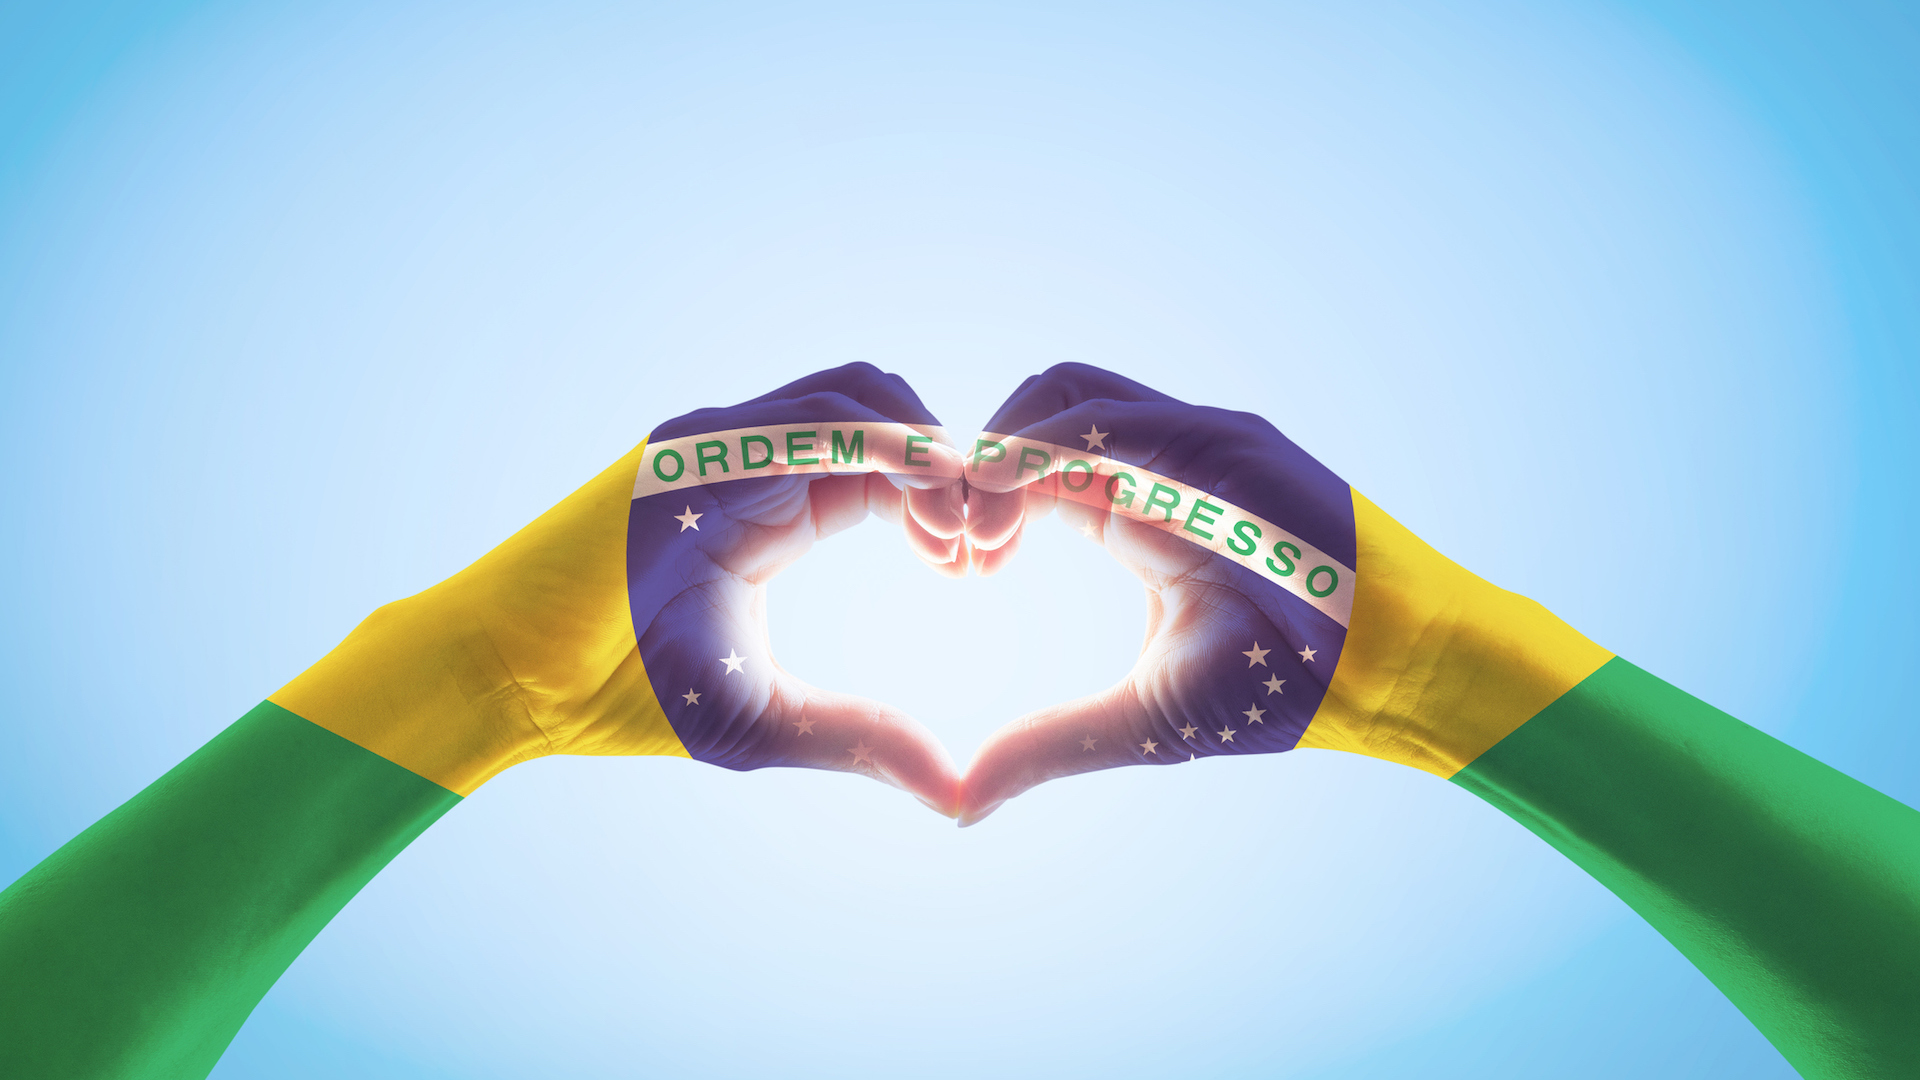 Brazil flag on someone's hands in heart shape